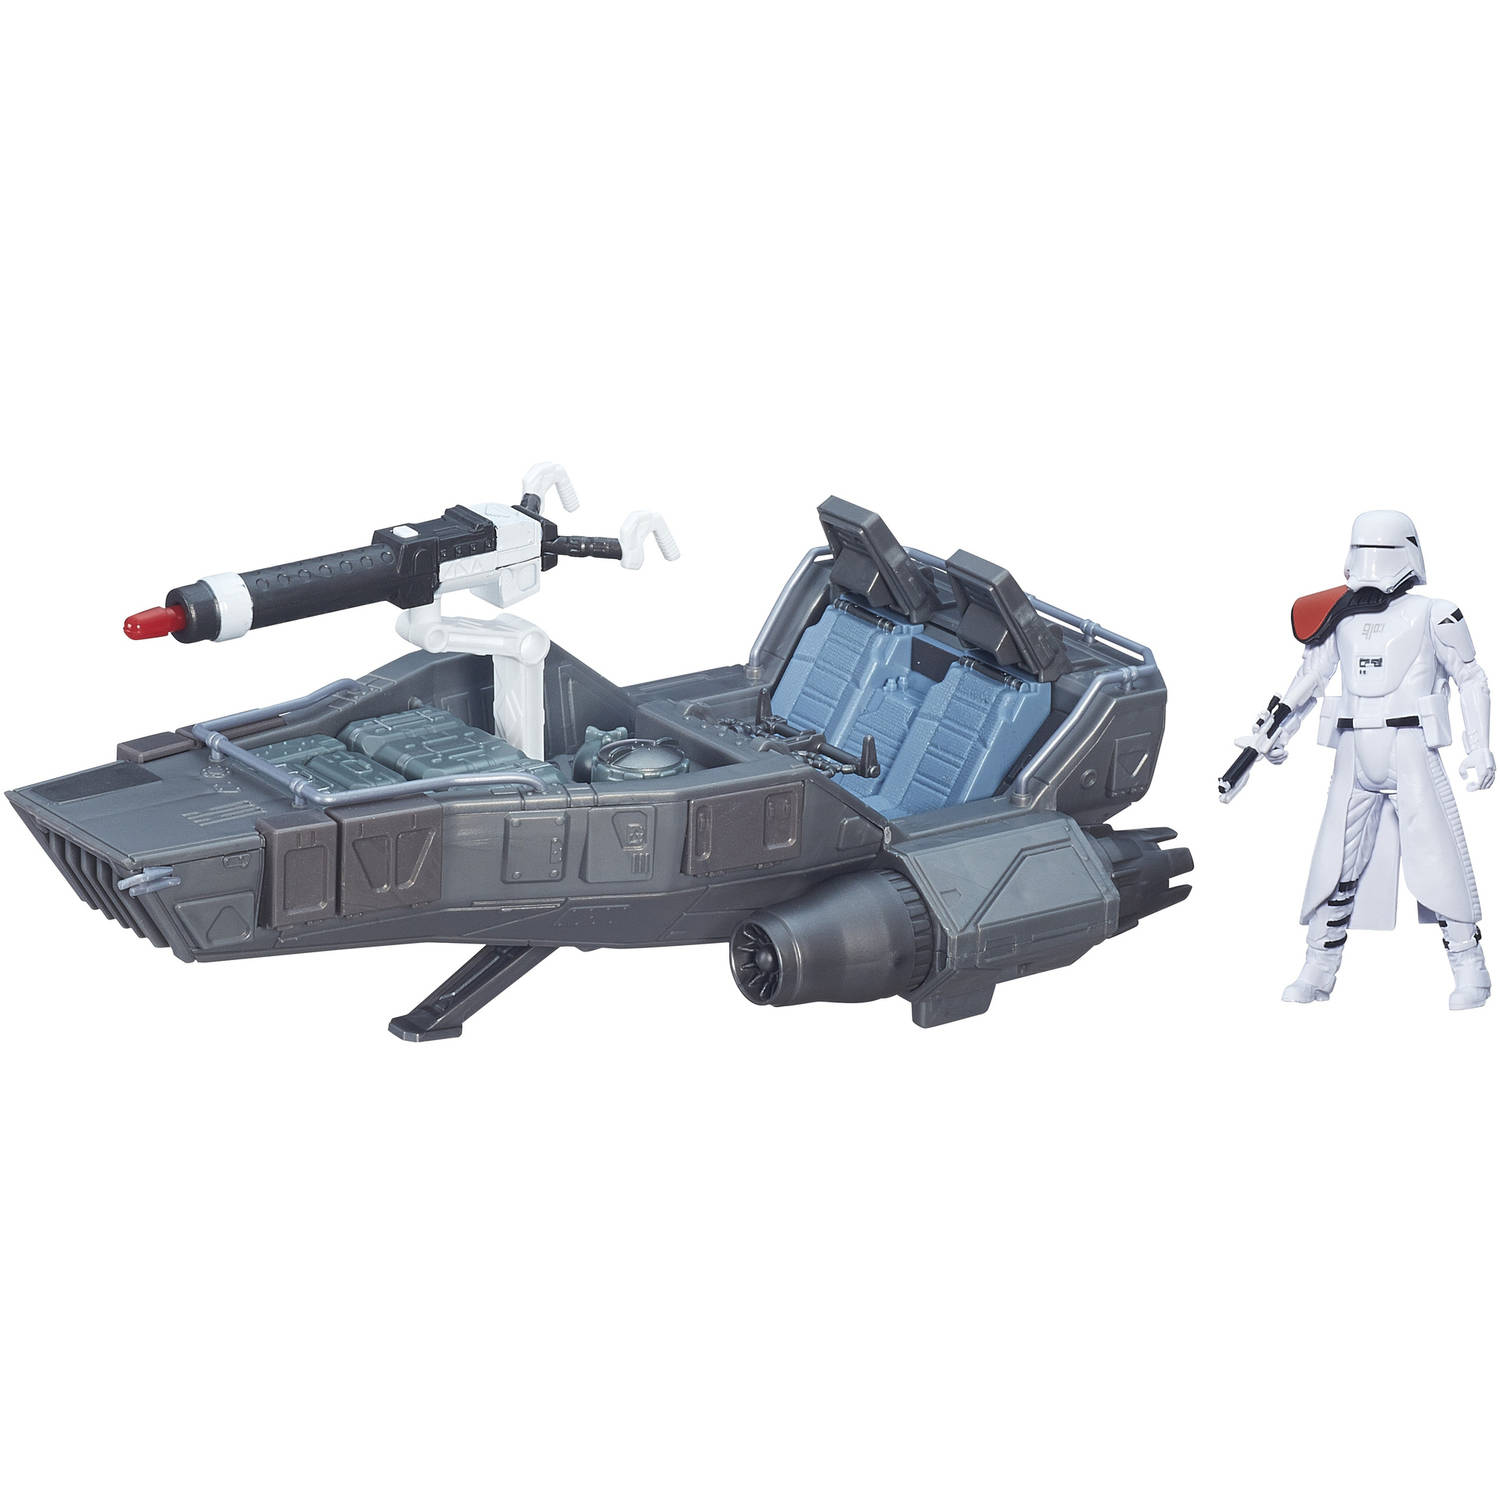 Star Wars The Force Awakens 3.75" Vehicle First Order Snowspeeder - image 1 of 2